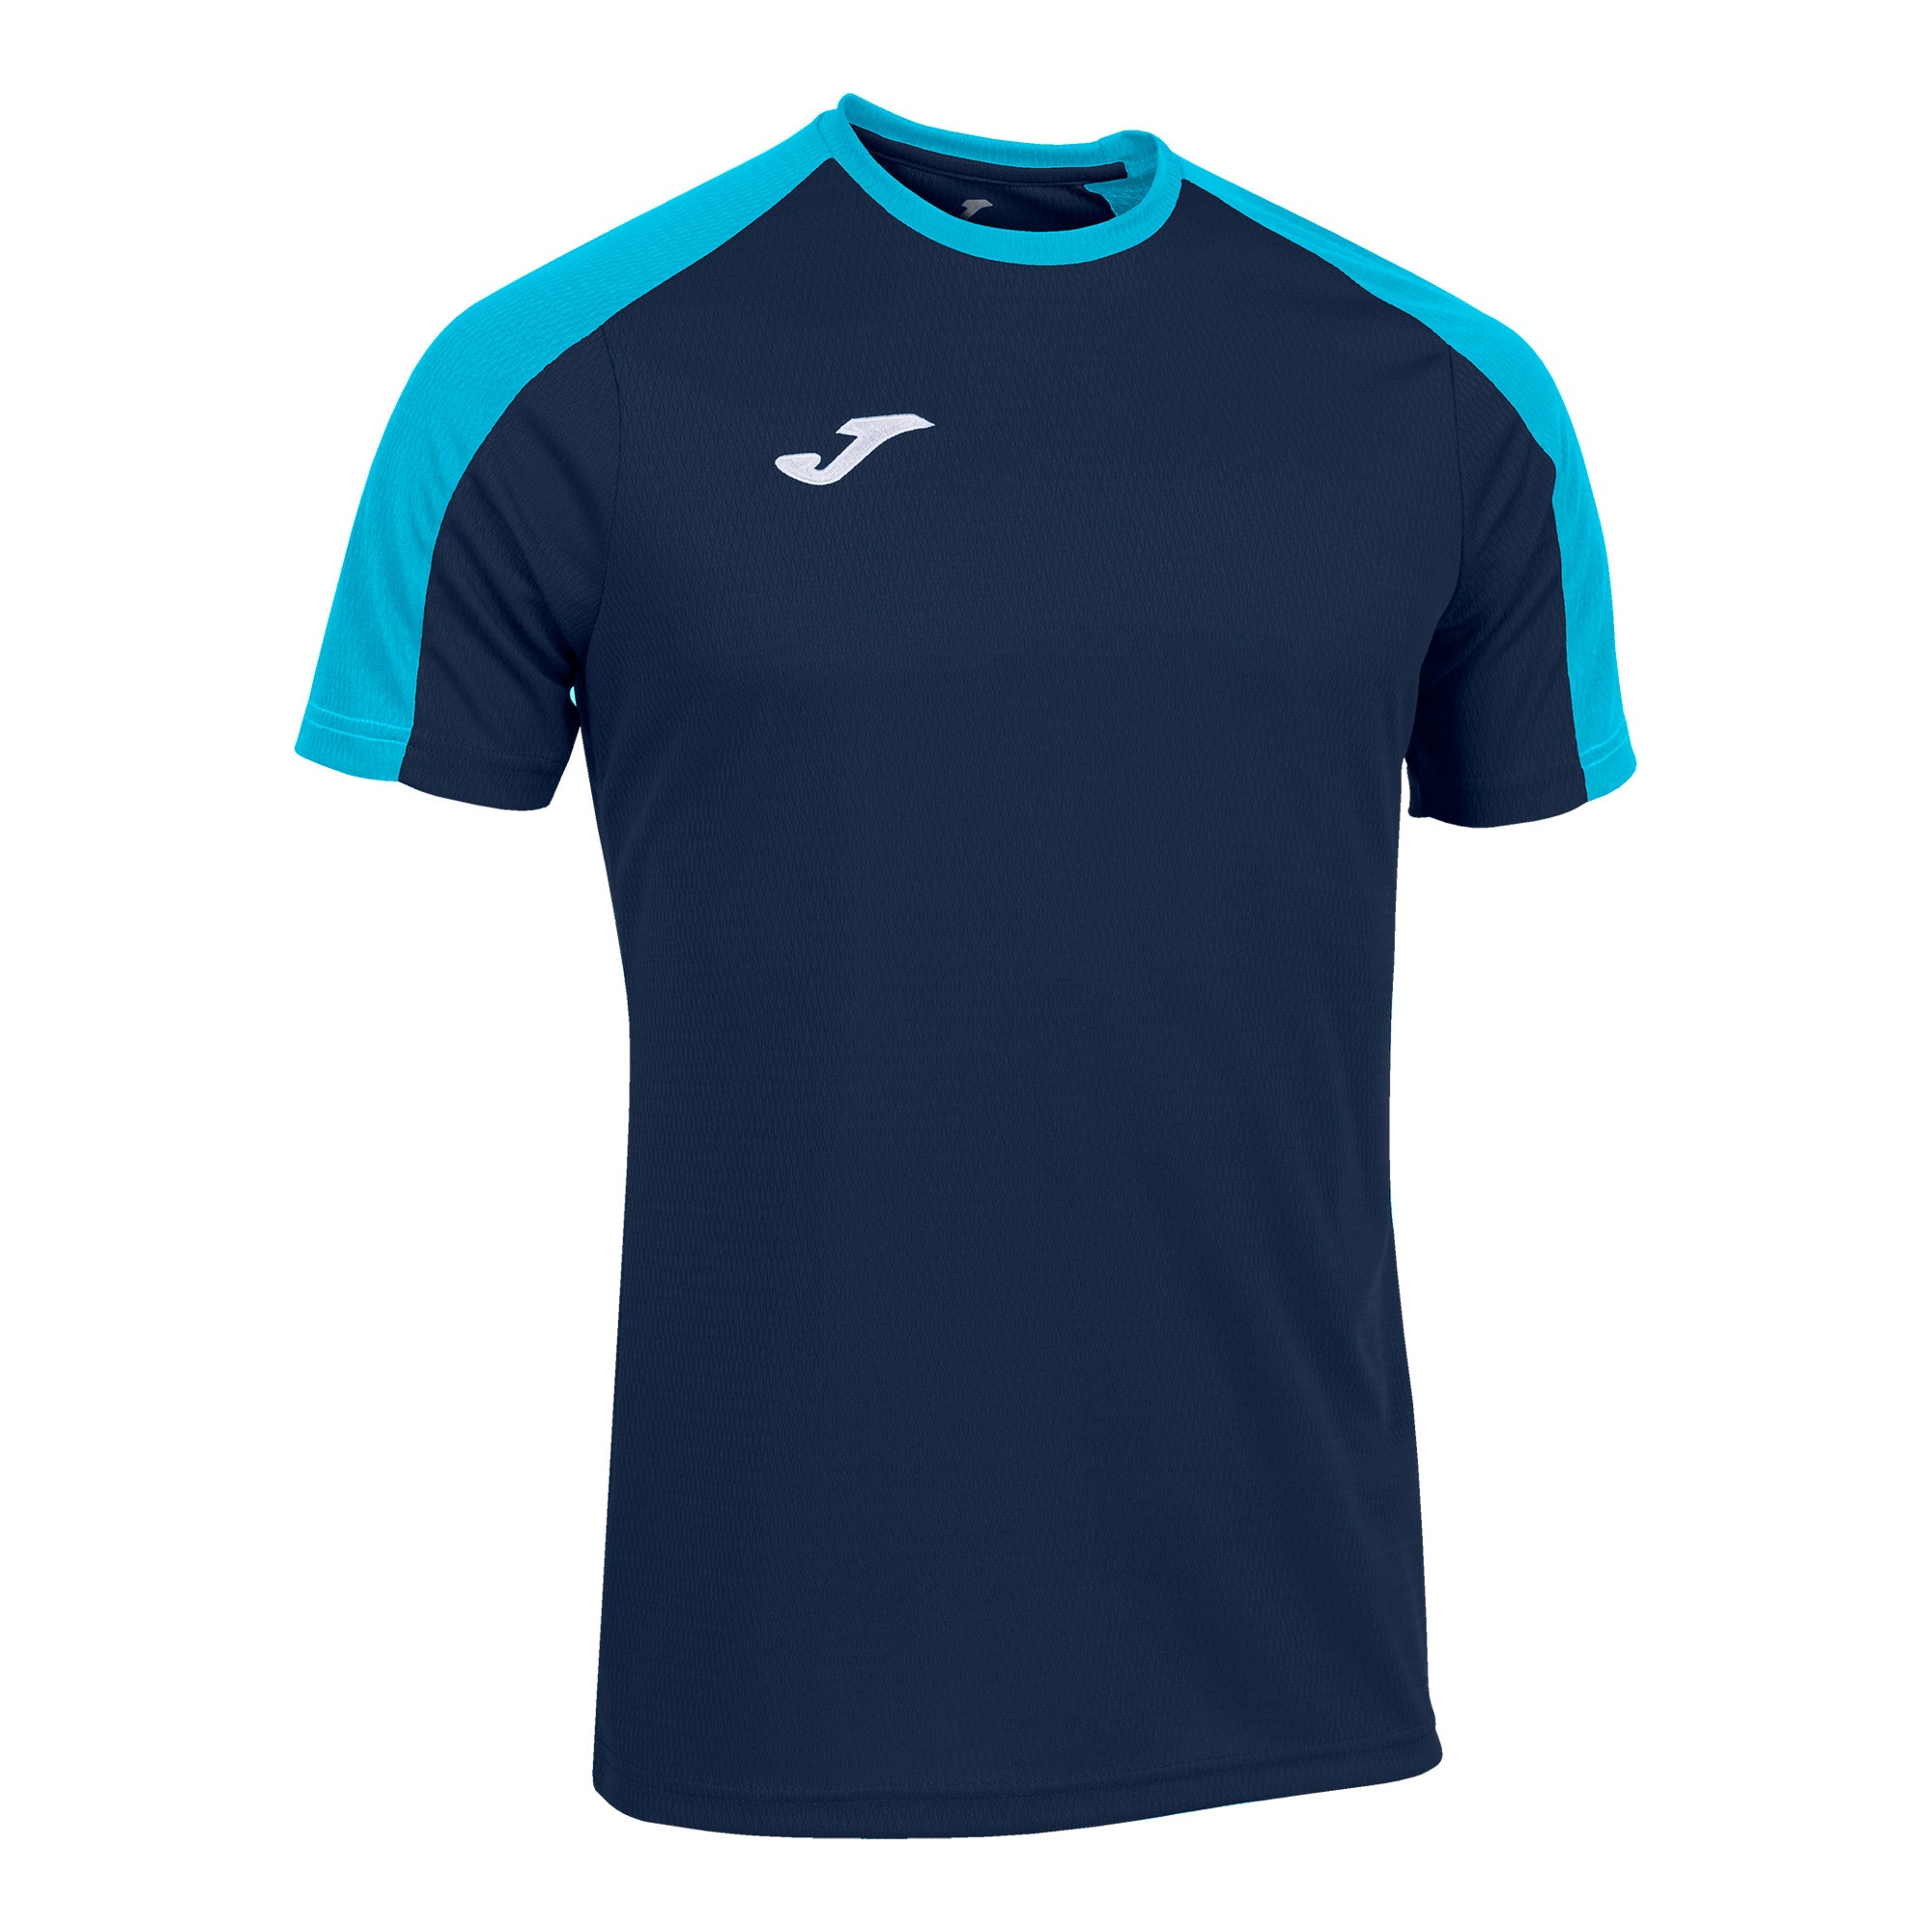 Joma Eco Championship Short Sleeve T-Shirt - Dark Navy/Turquoise Fluor